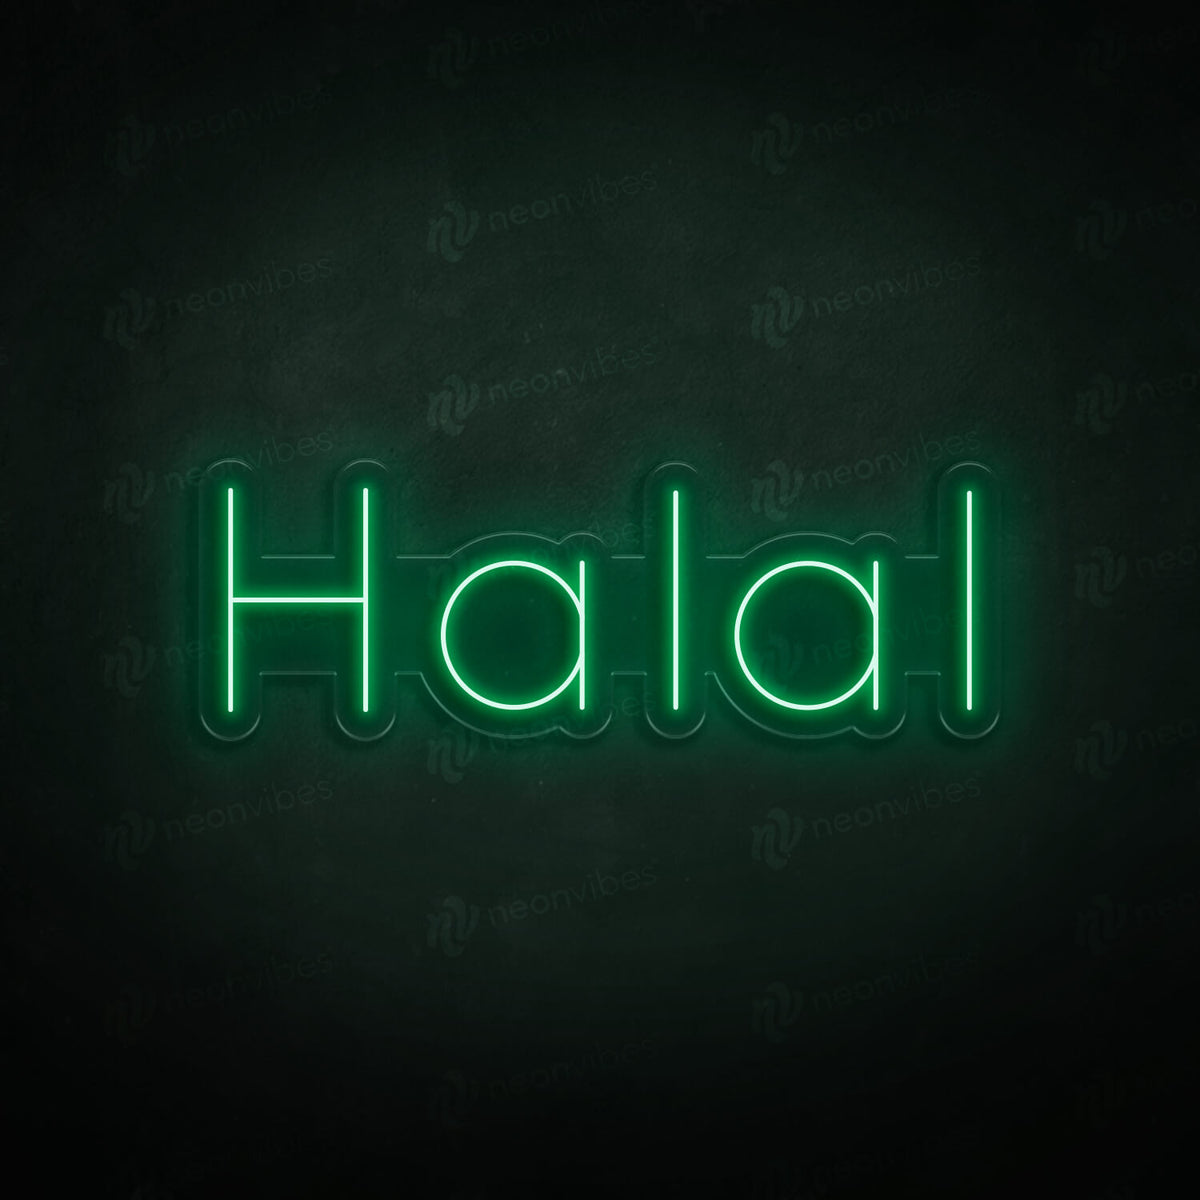 Halal neon sign